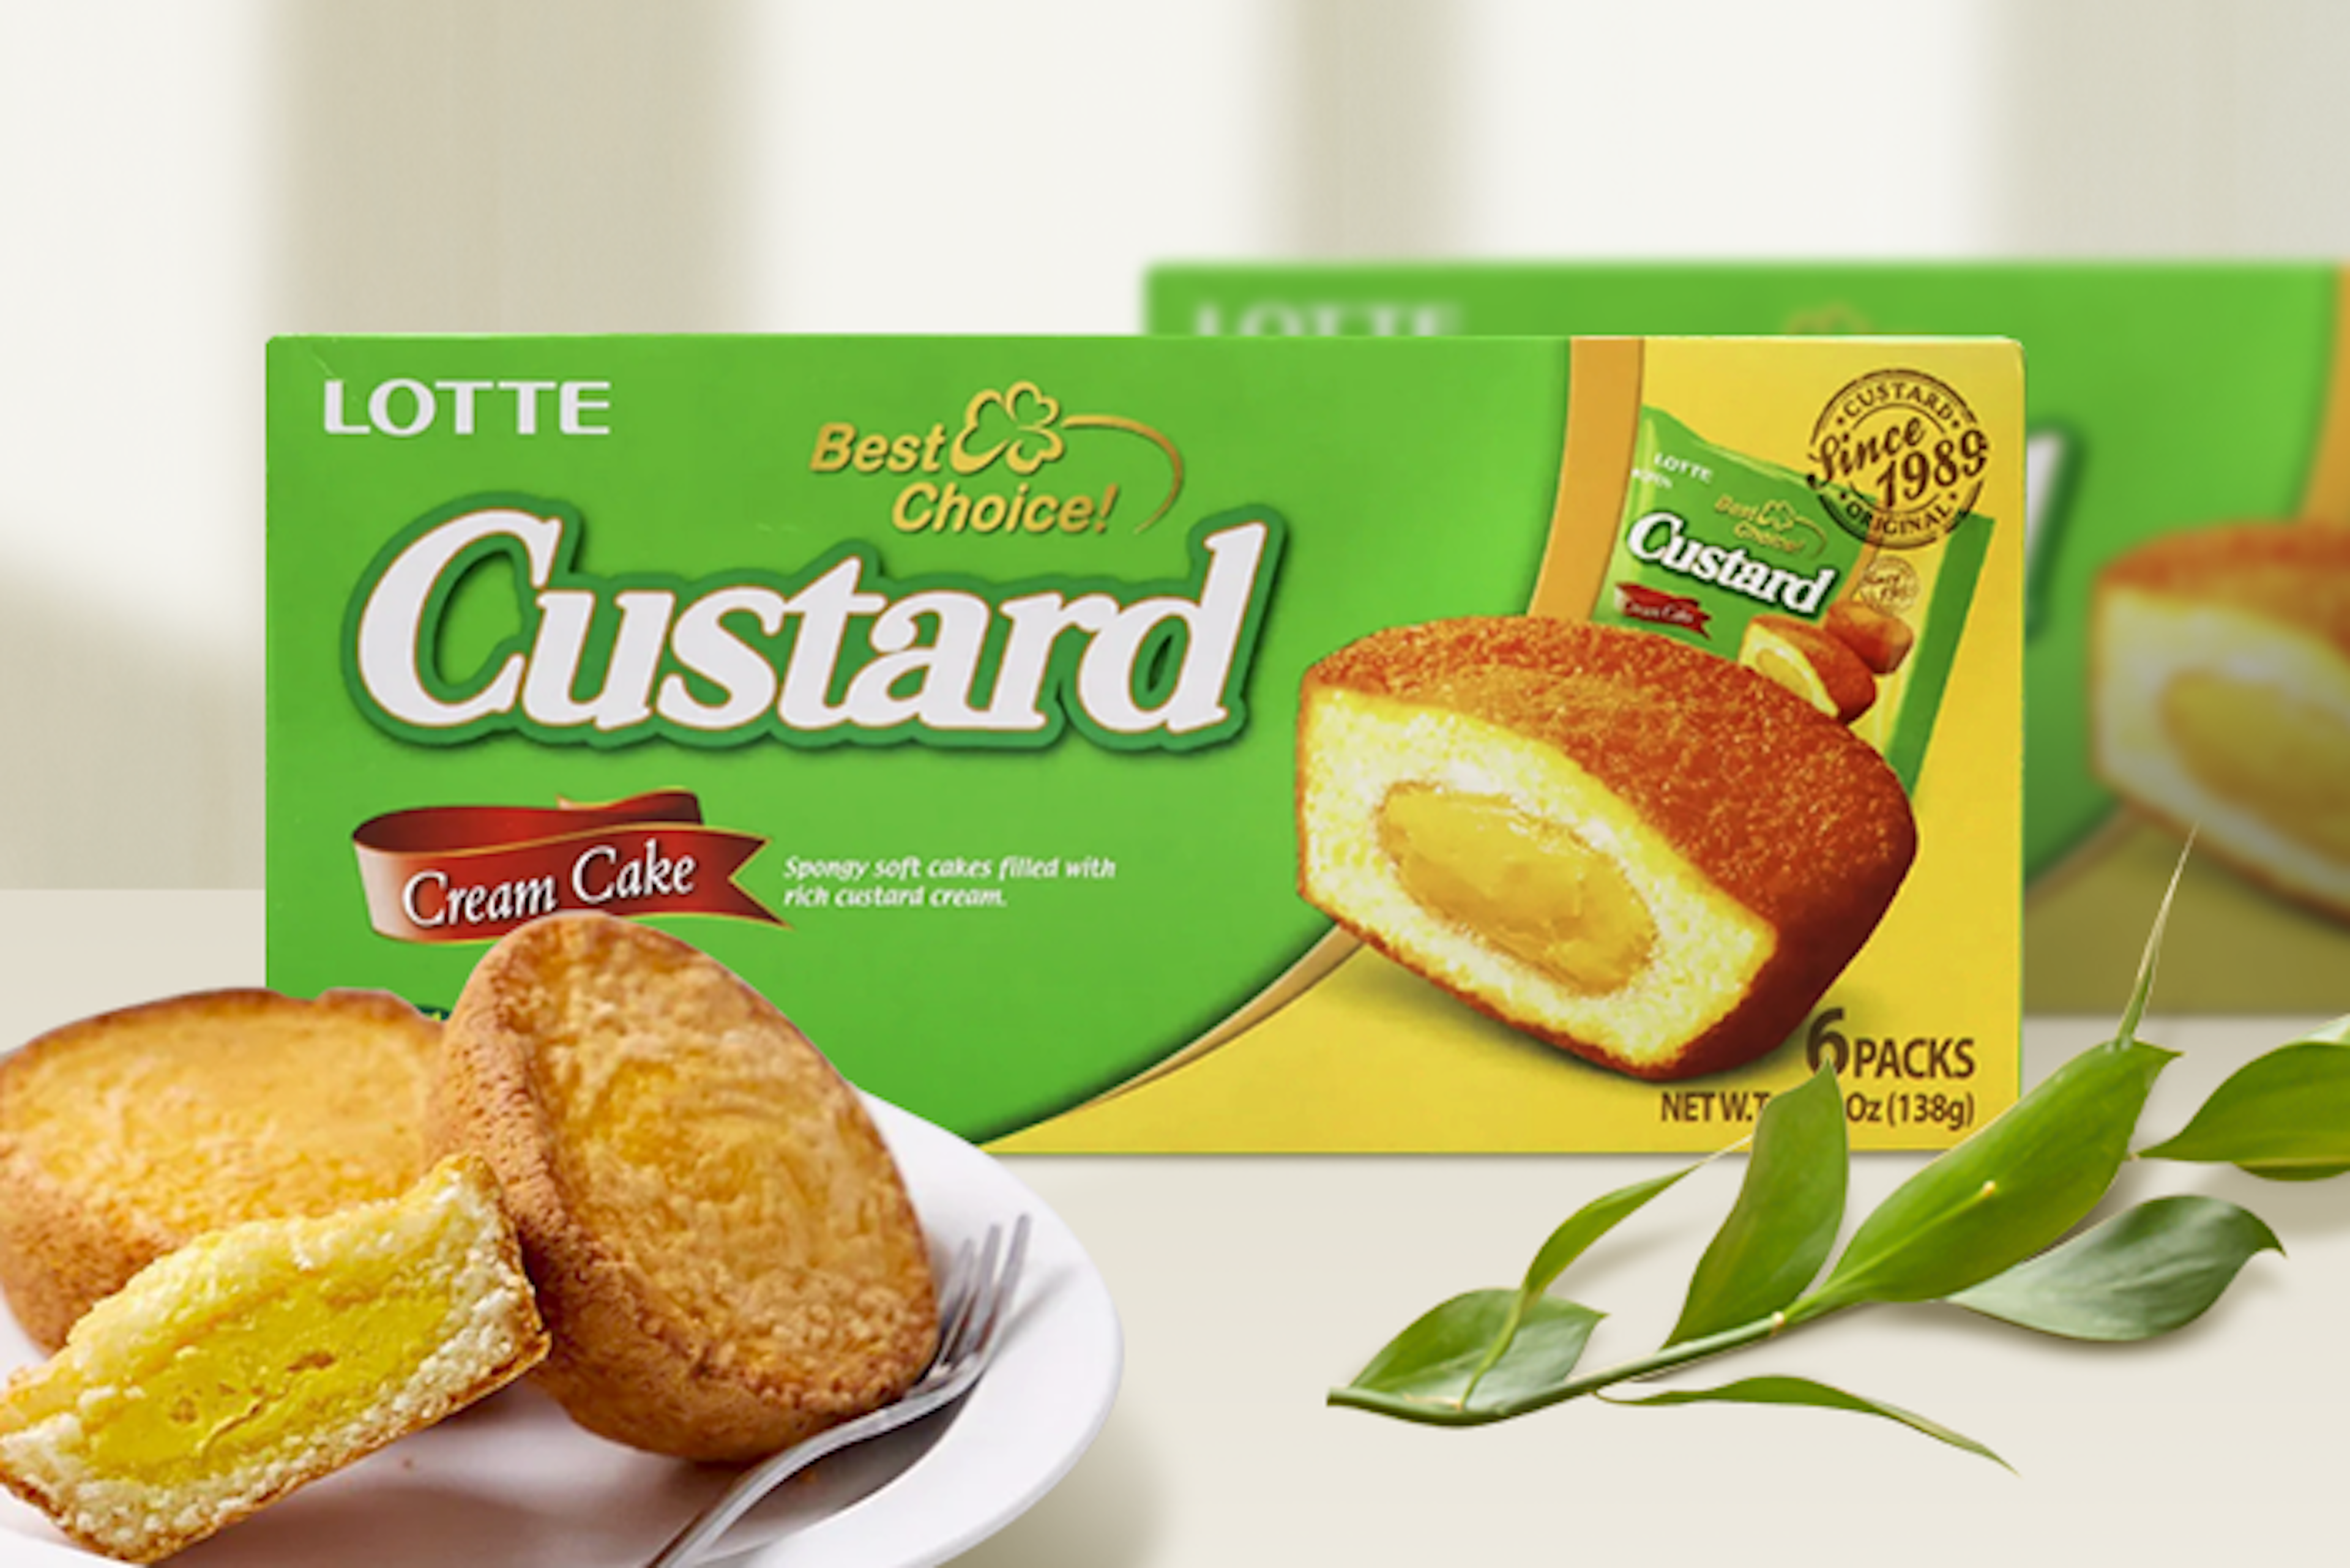 A close-up of a Lotte Custard Cream Cake split open to reveal the custard filling.